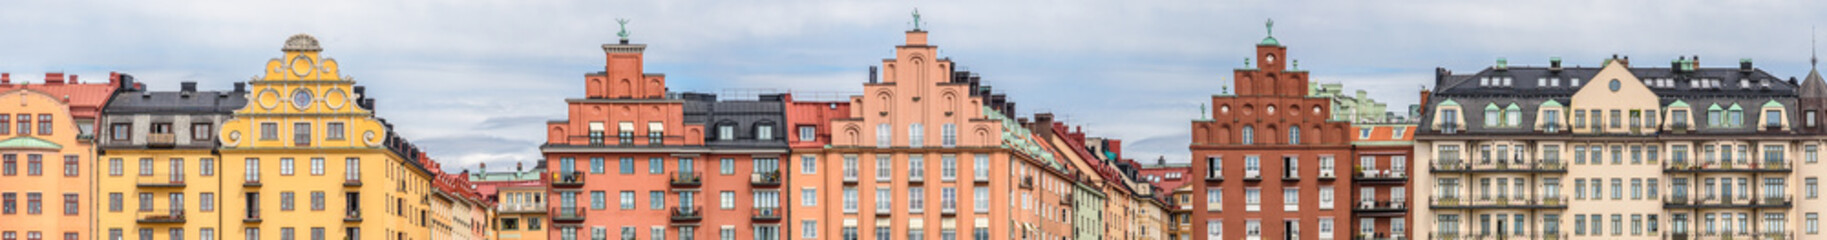 Stockholm facade panorama